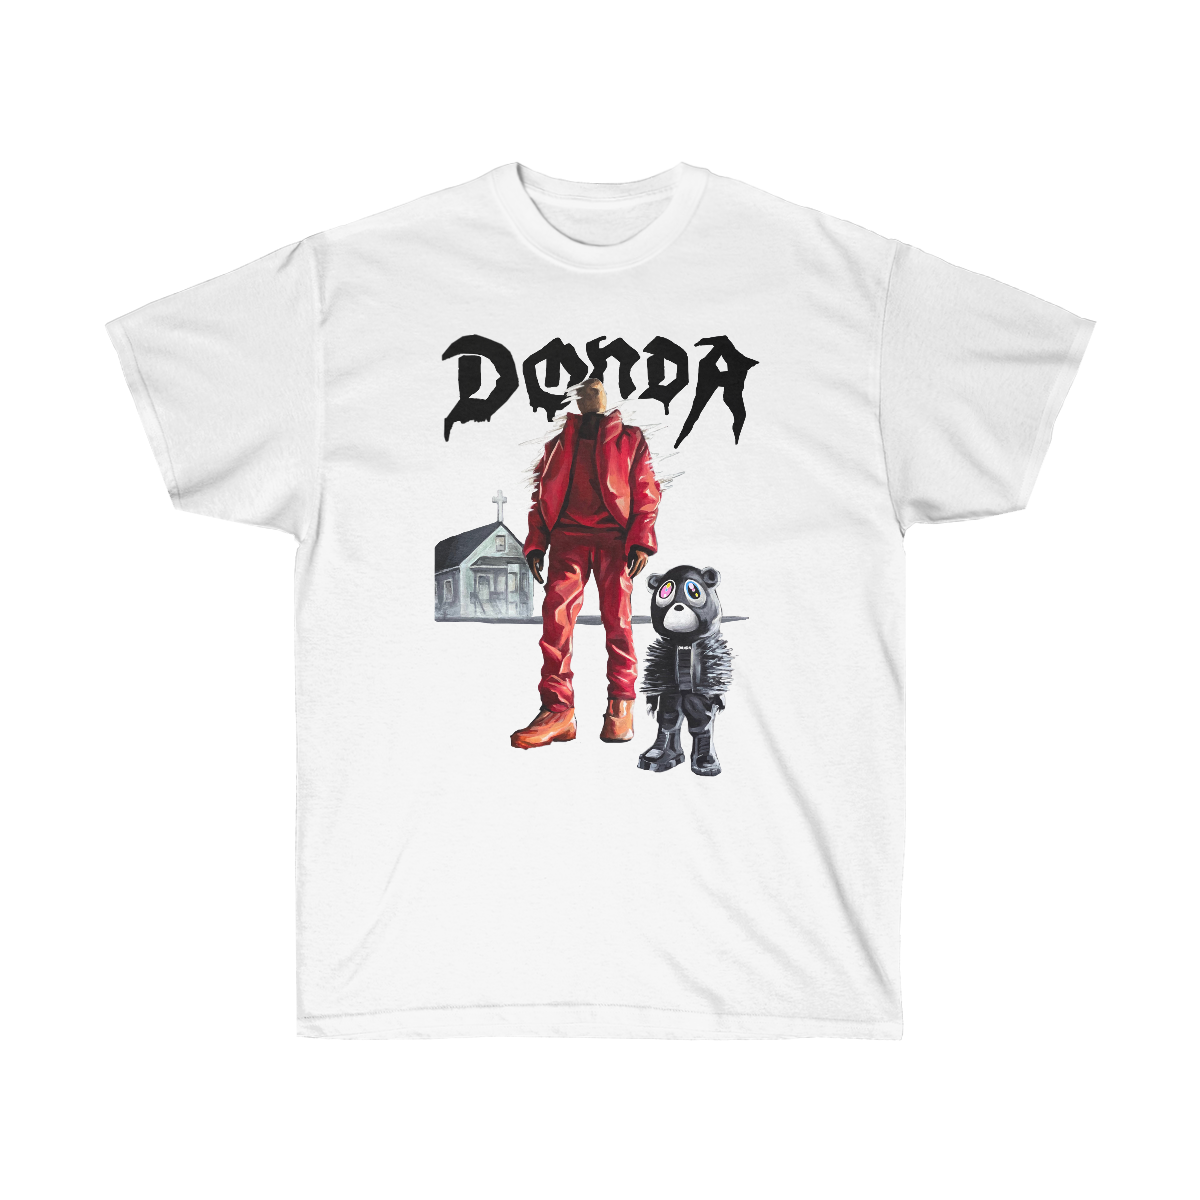 Kanye Donda - T-Shirt - Tommy Manning Art